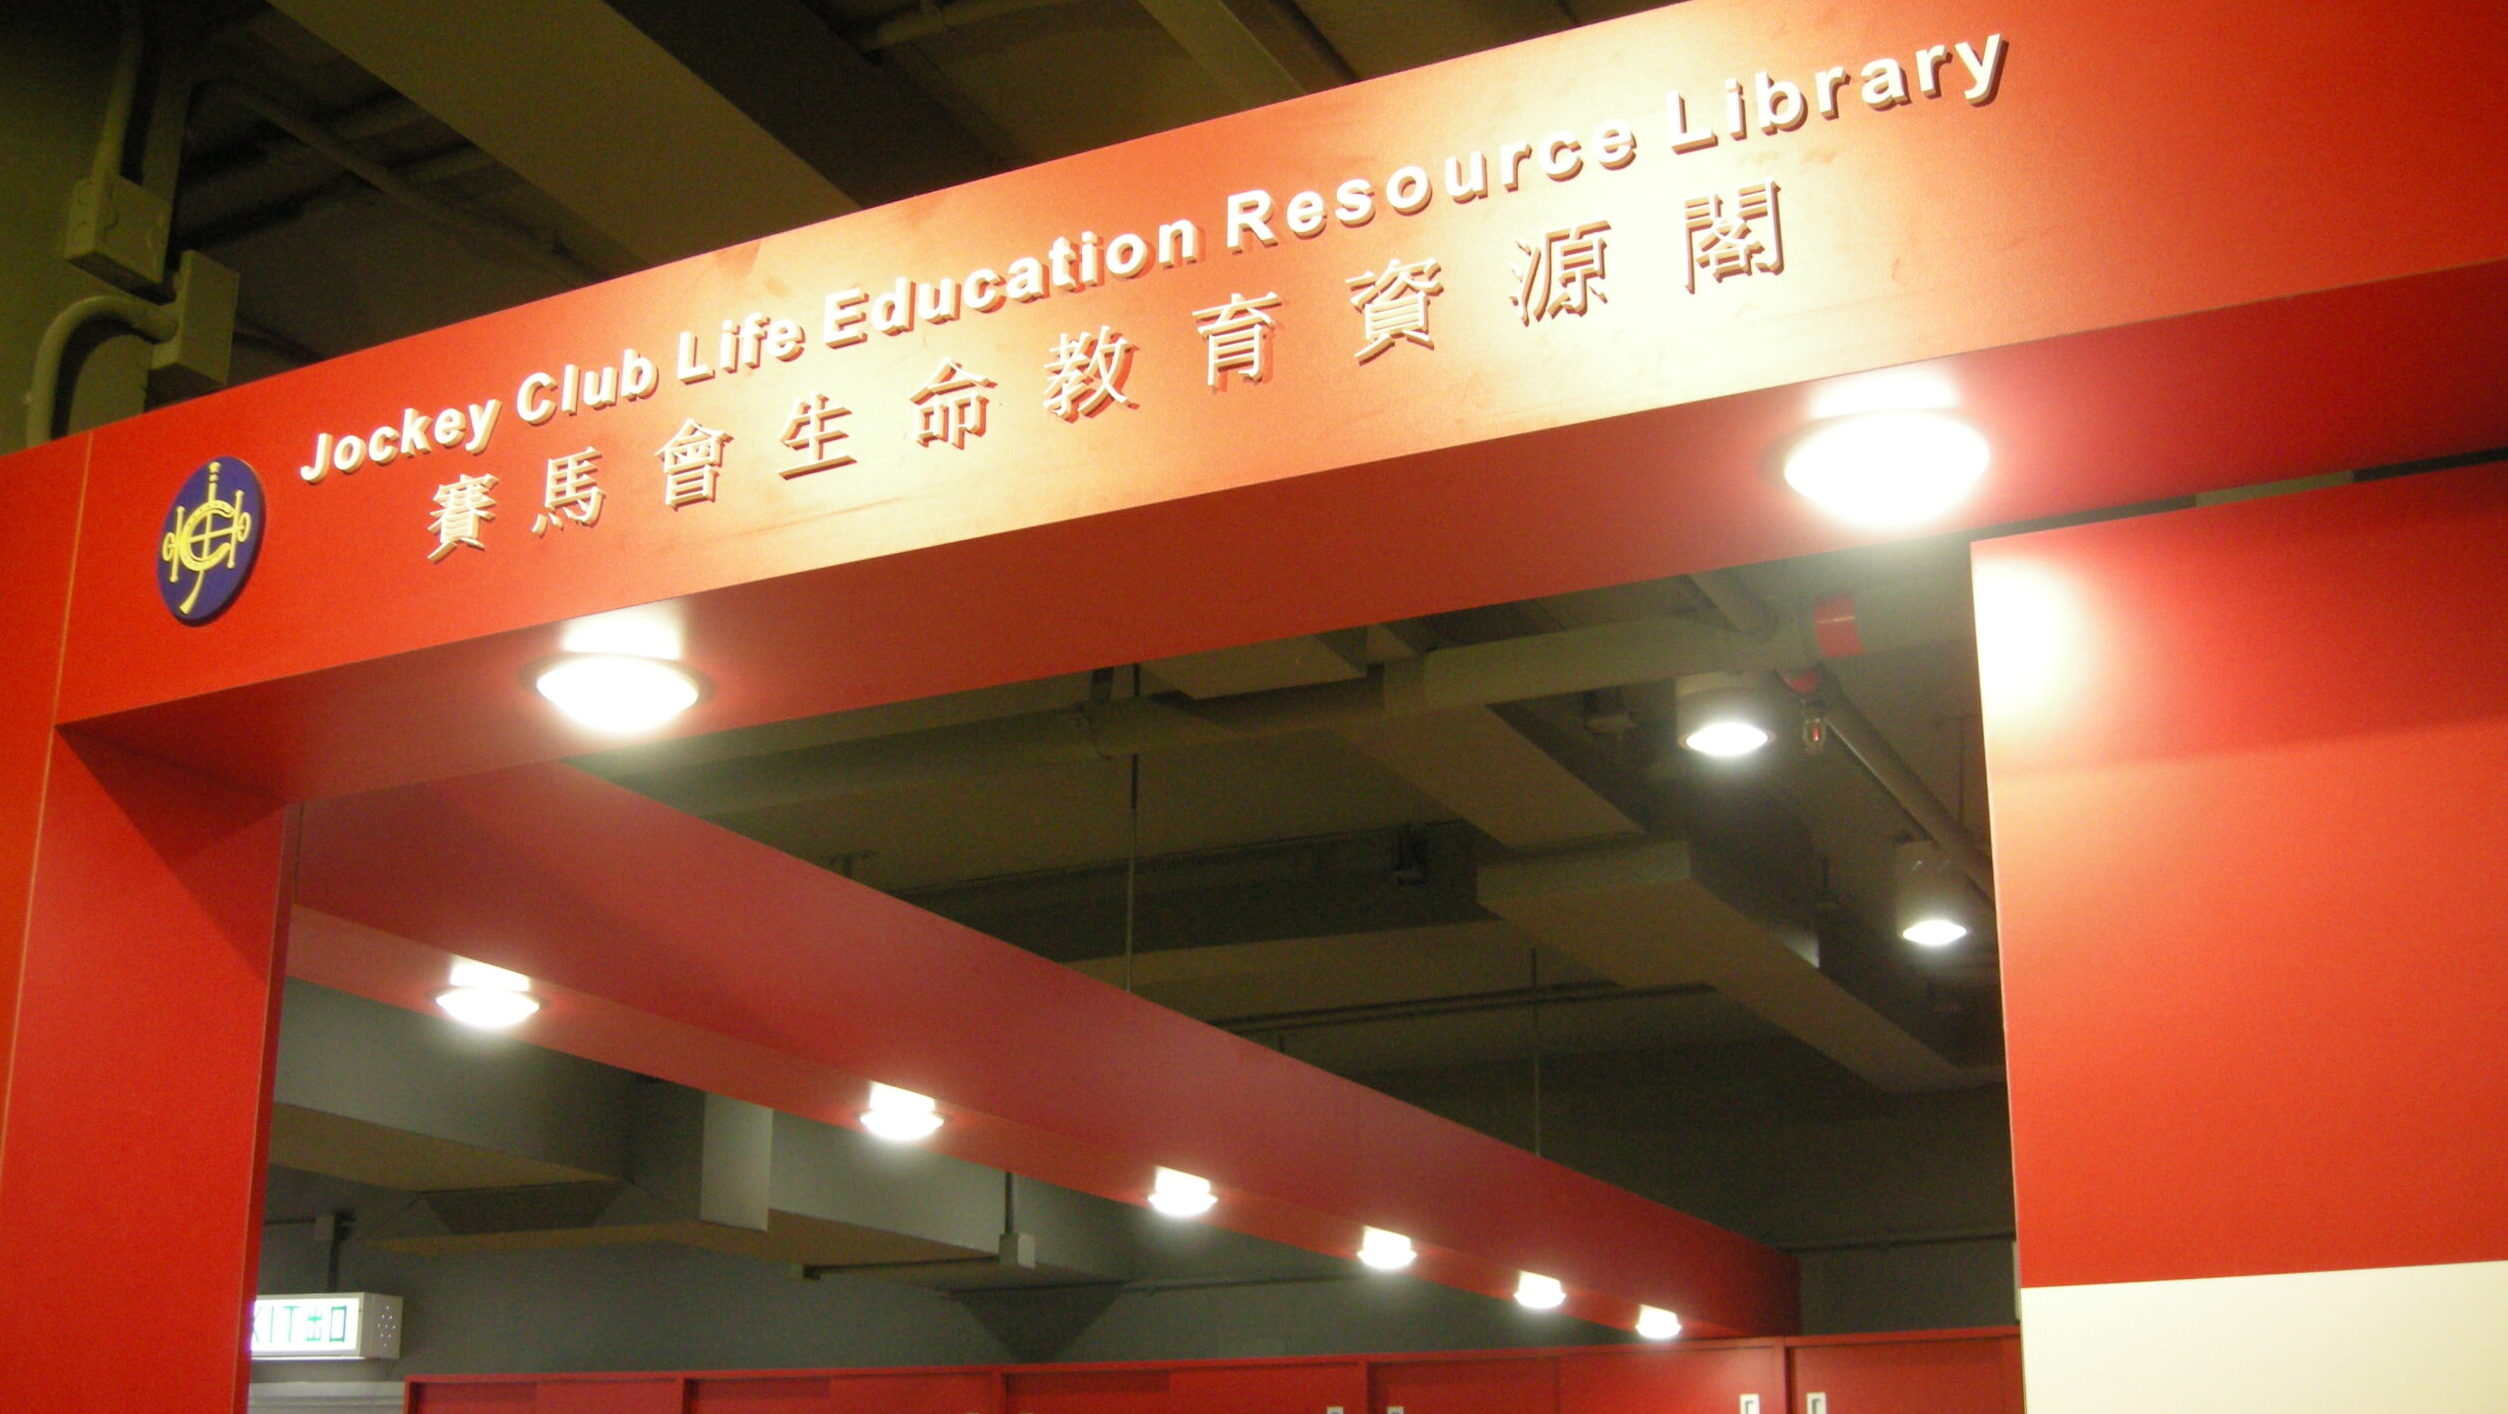 賽馬會生命教育資源閣相片 Photo of Jockey Club Life Education Resource Library